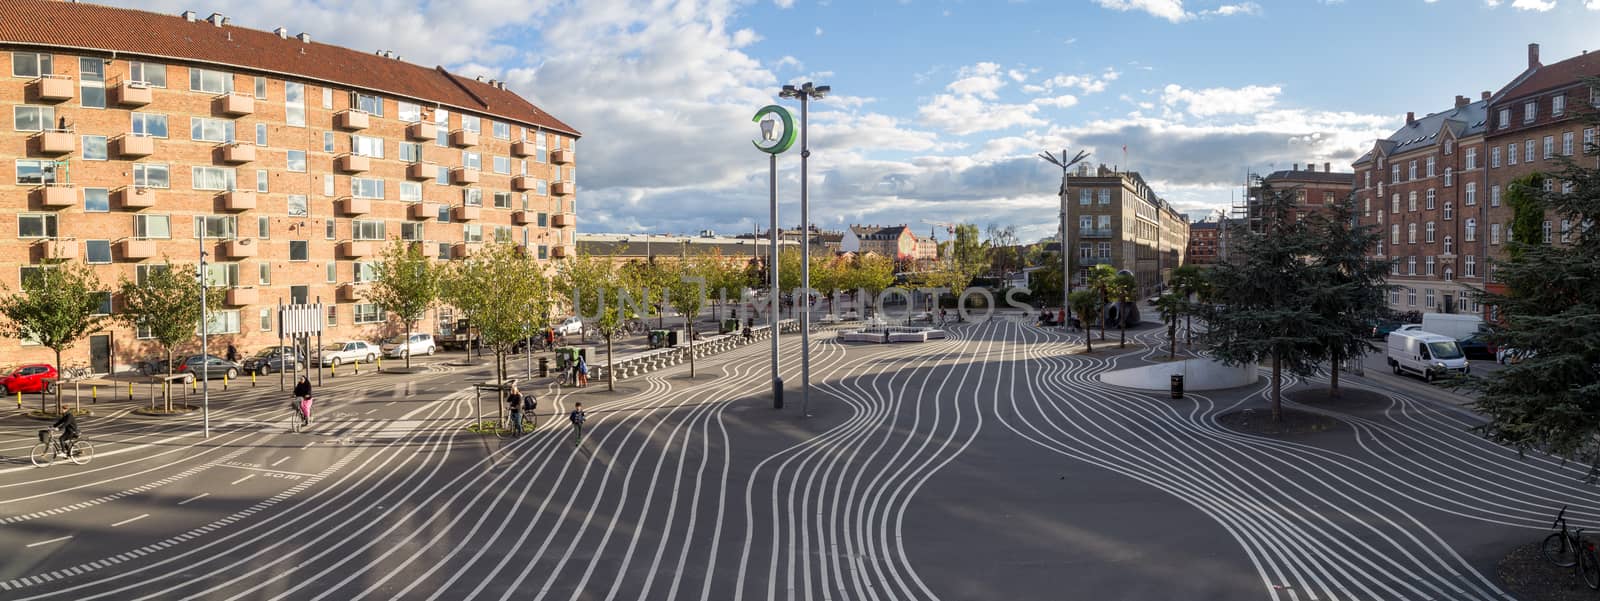 Copenhagen, Denmark - October 4, 2014: Panoramic View of Superkilen Park in Norrebro district. Designed by the arts group Superflex.